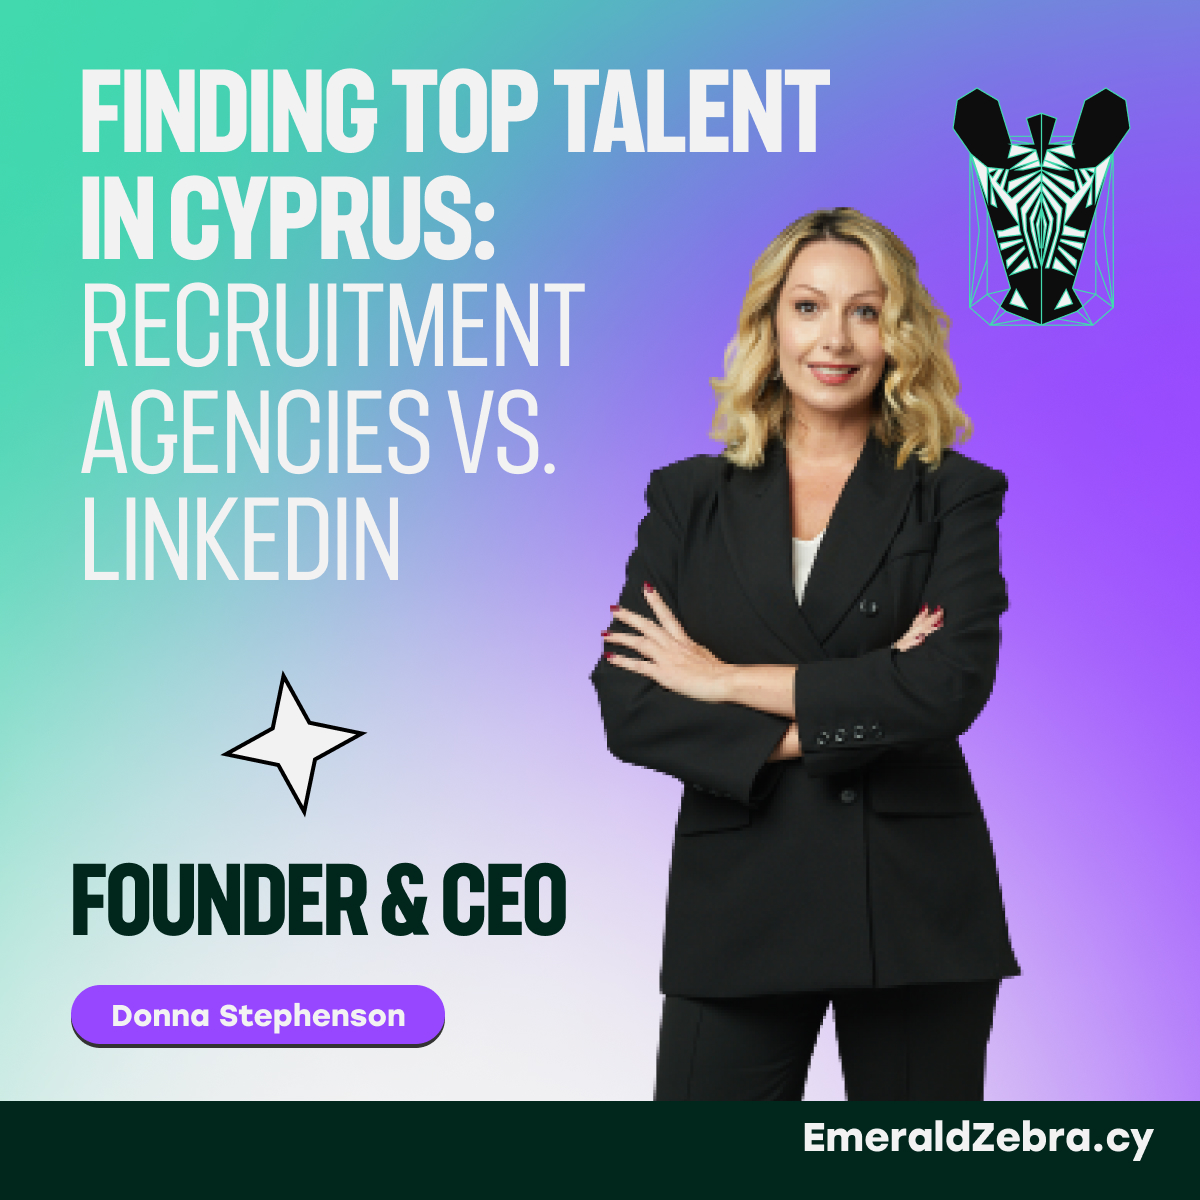 Finding Top Talent in Cyprus Recruitment Agencies vs LinkedIn